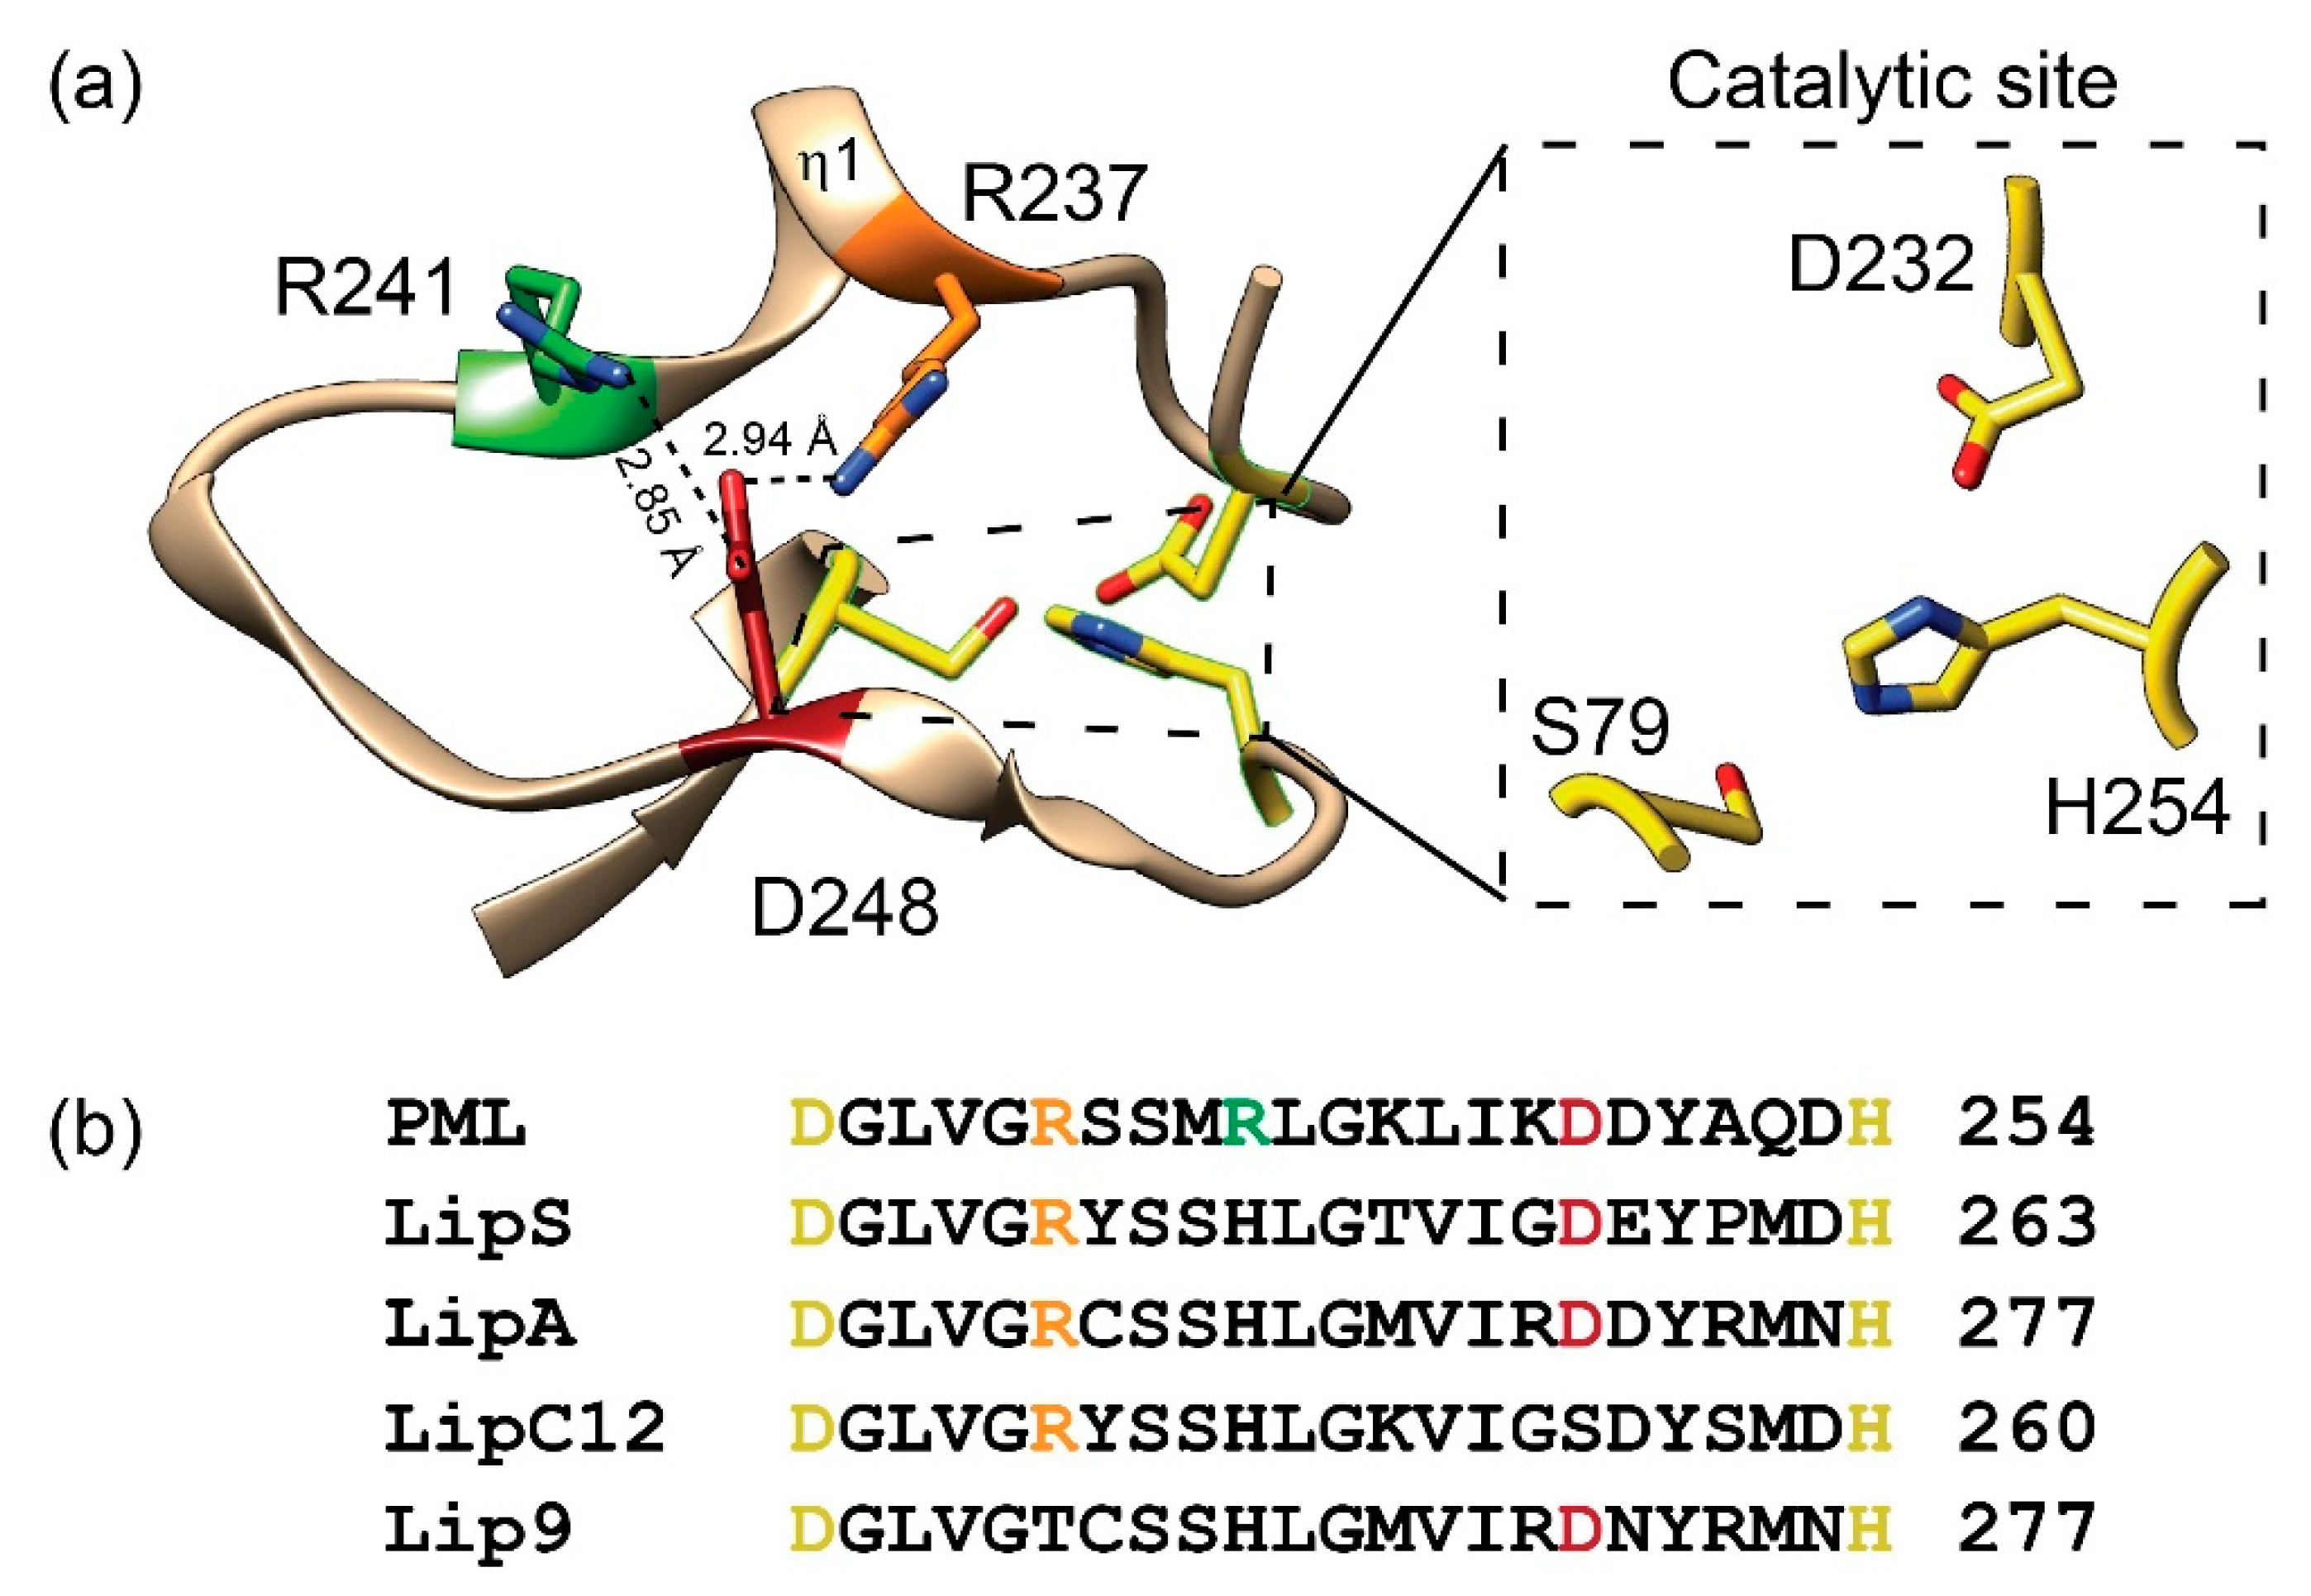 Evolution of Organic Solvent-Resistant DNA Polymerases